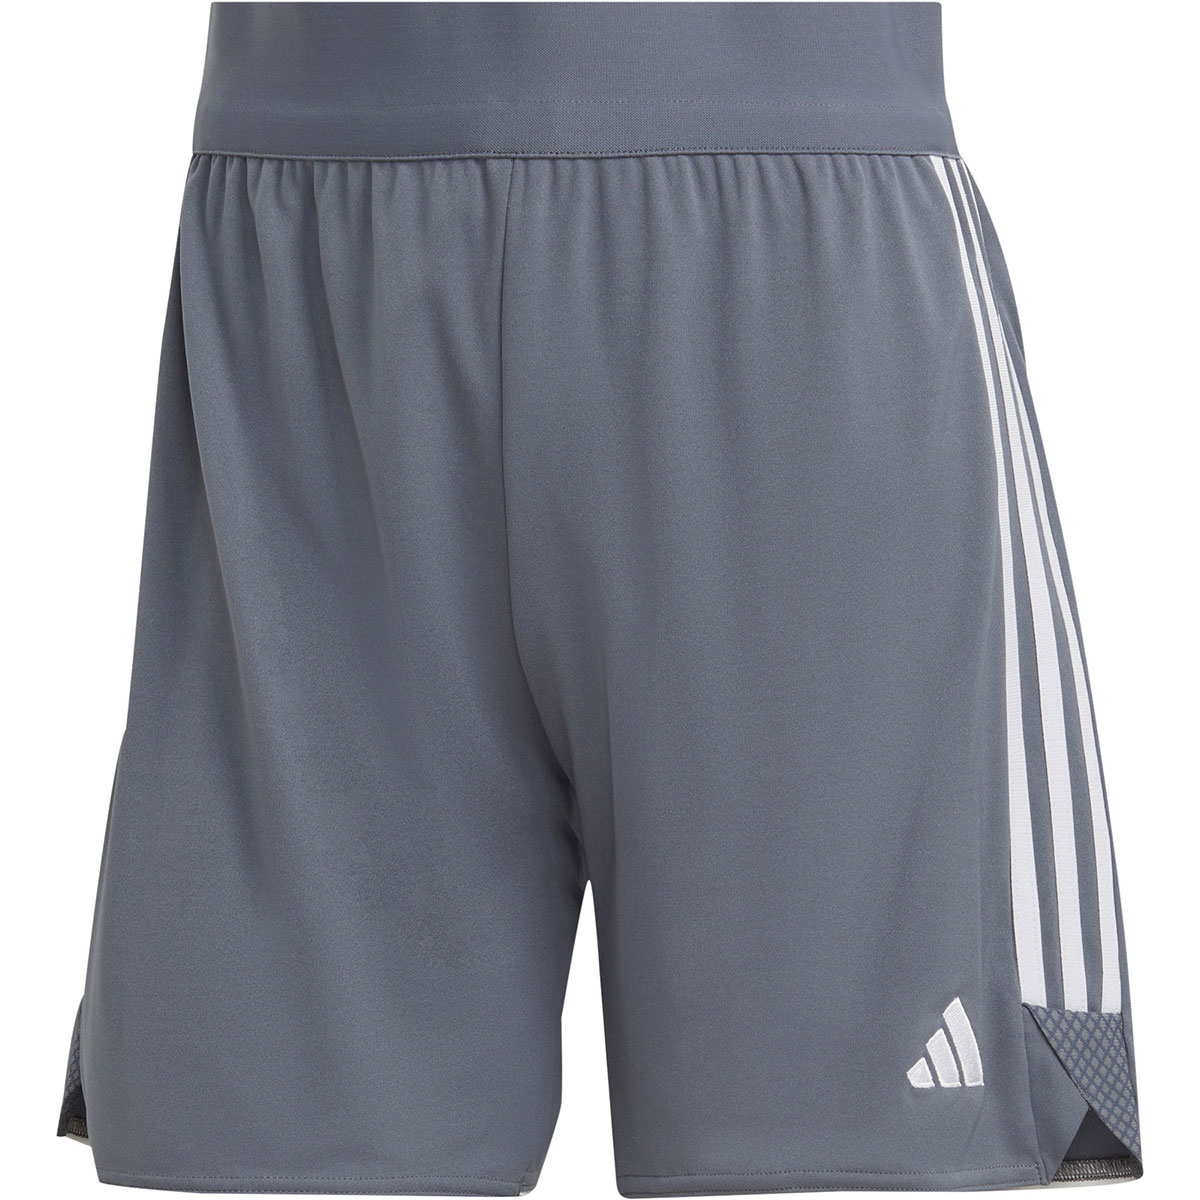 Adidas Damen Shorts Tiro 23 grau-weiß